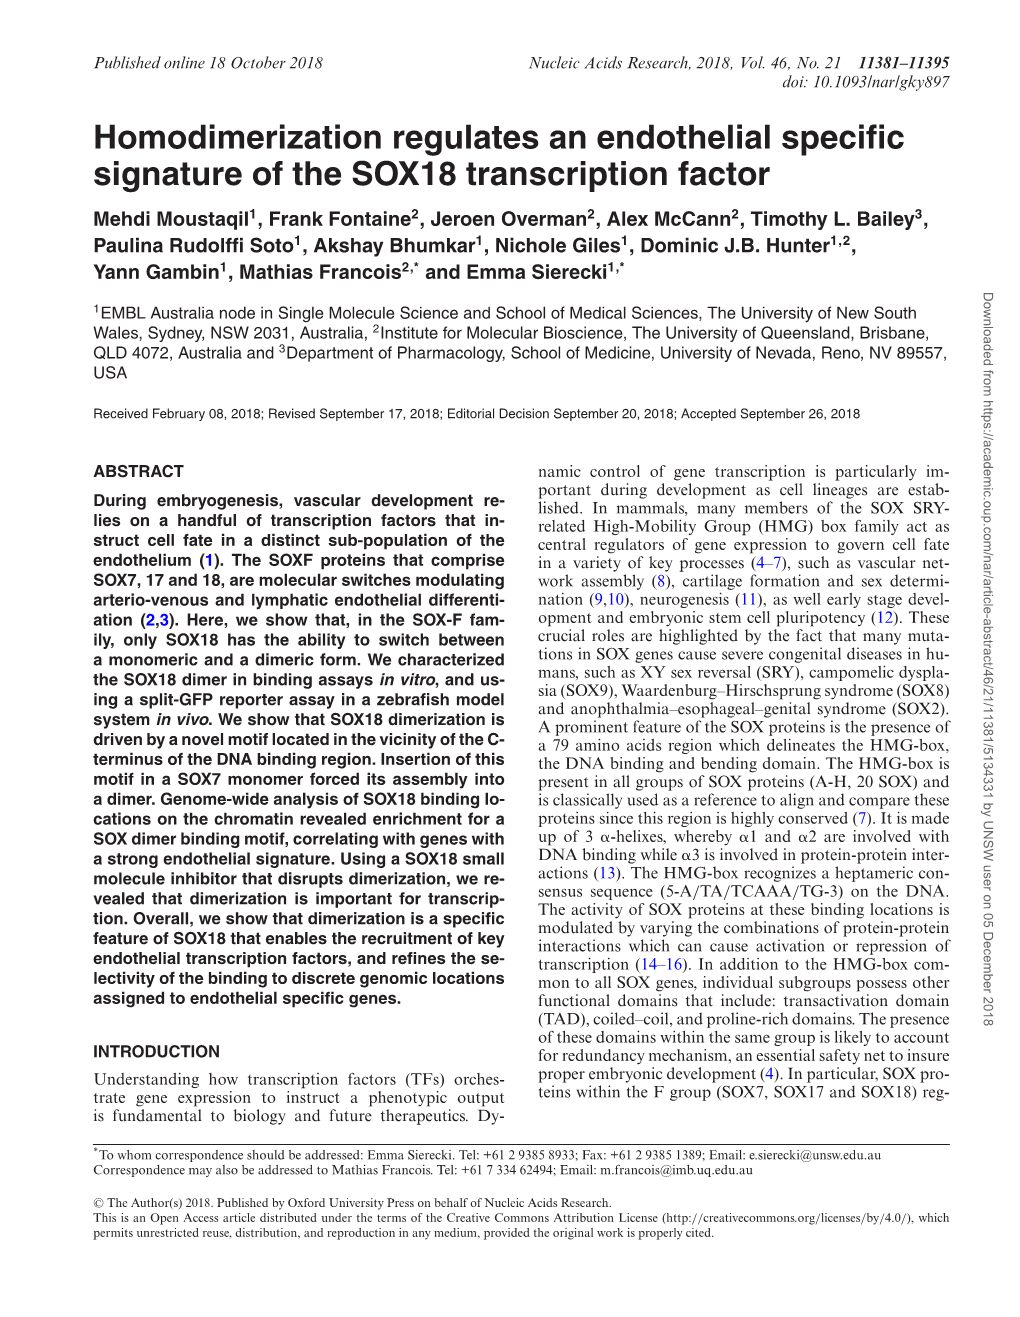 Homodimerization Regulates an Endothelial Specific Signature of the SOX18 Transcription Factor